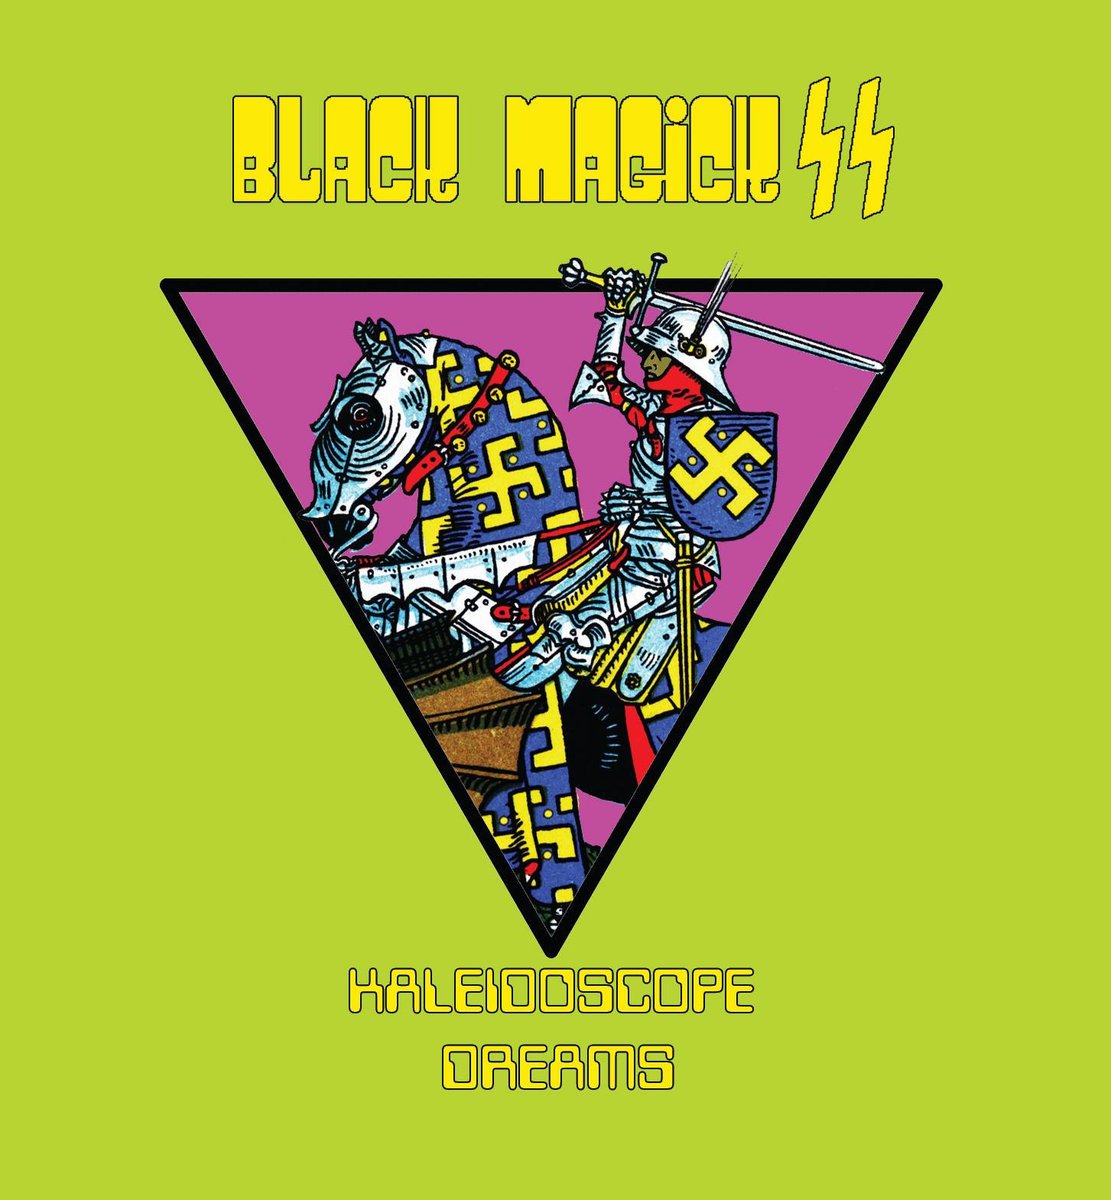 Black Magick SS - Kaleidoscope Dreams (2018) Vinyl FLAC Download